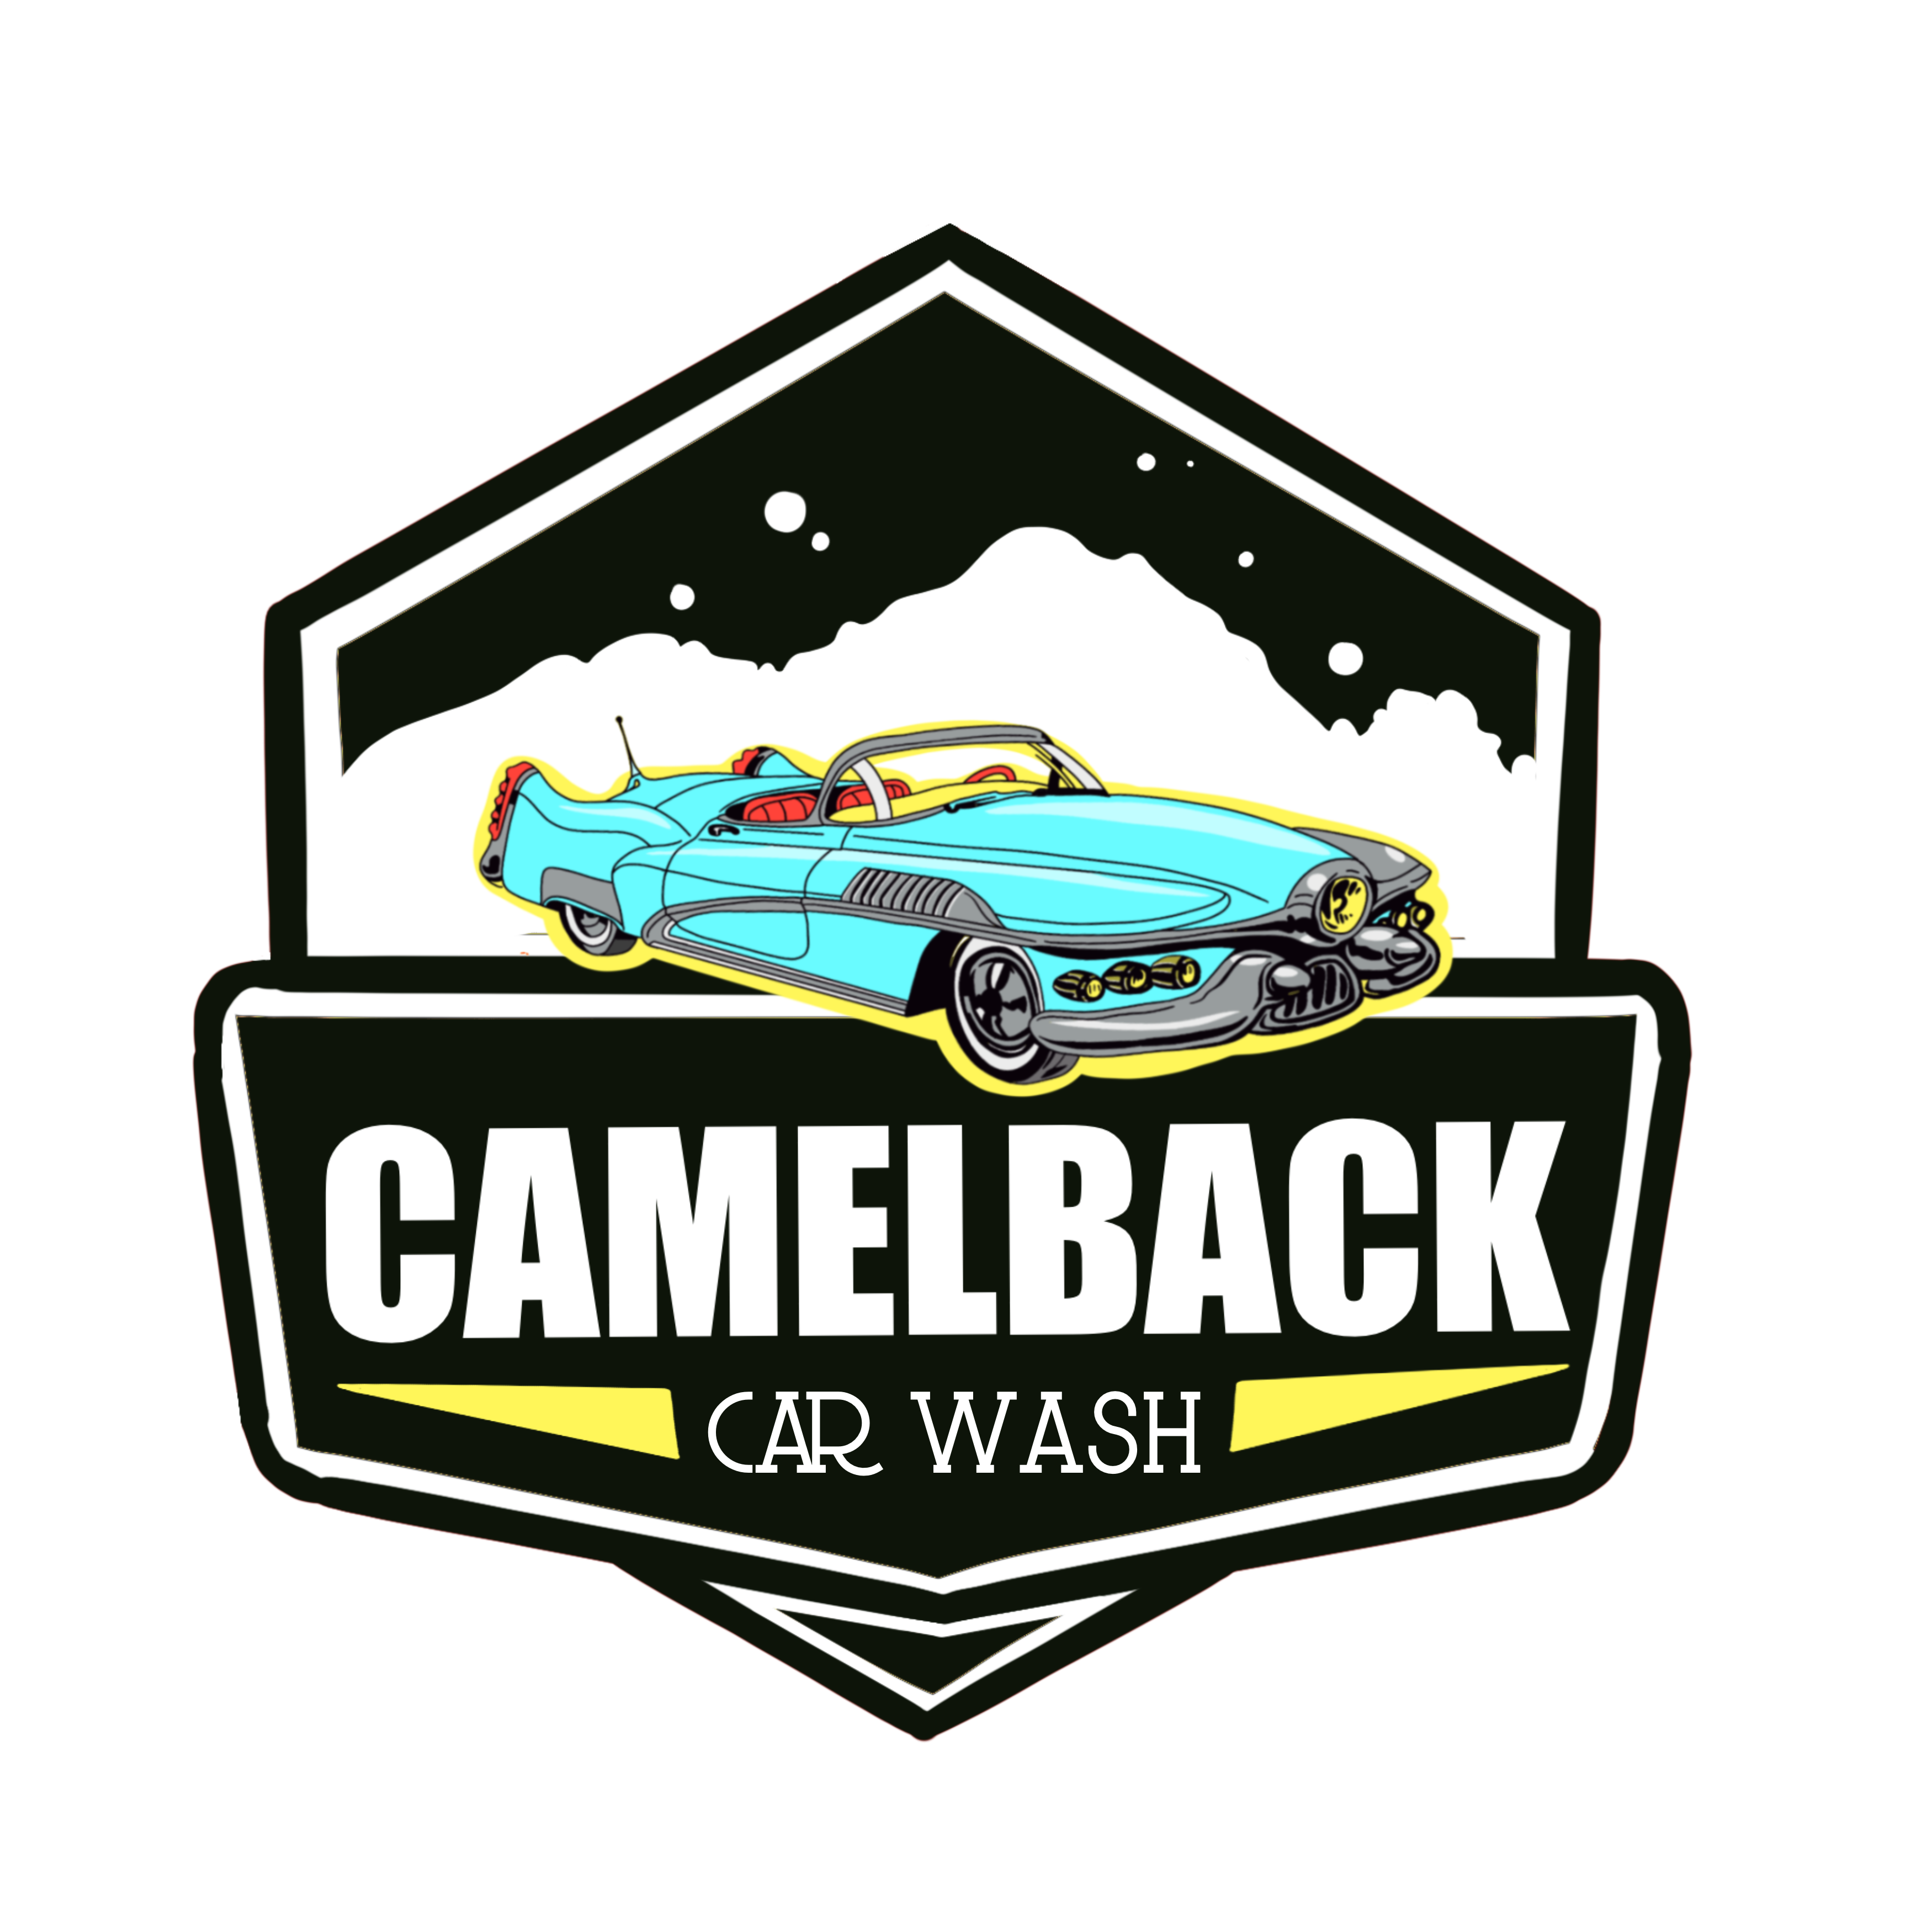 Camelback Carwash Logo